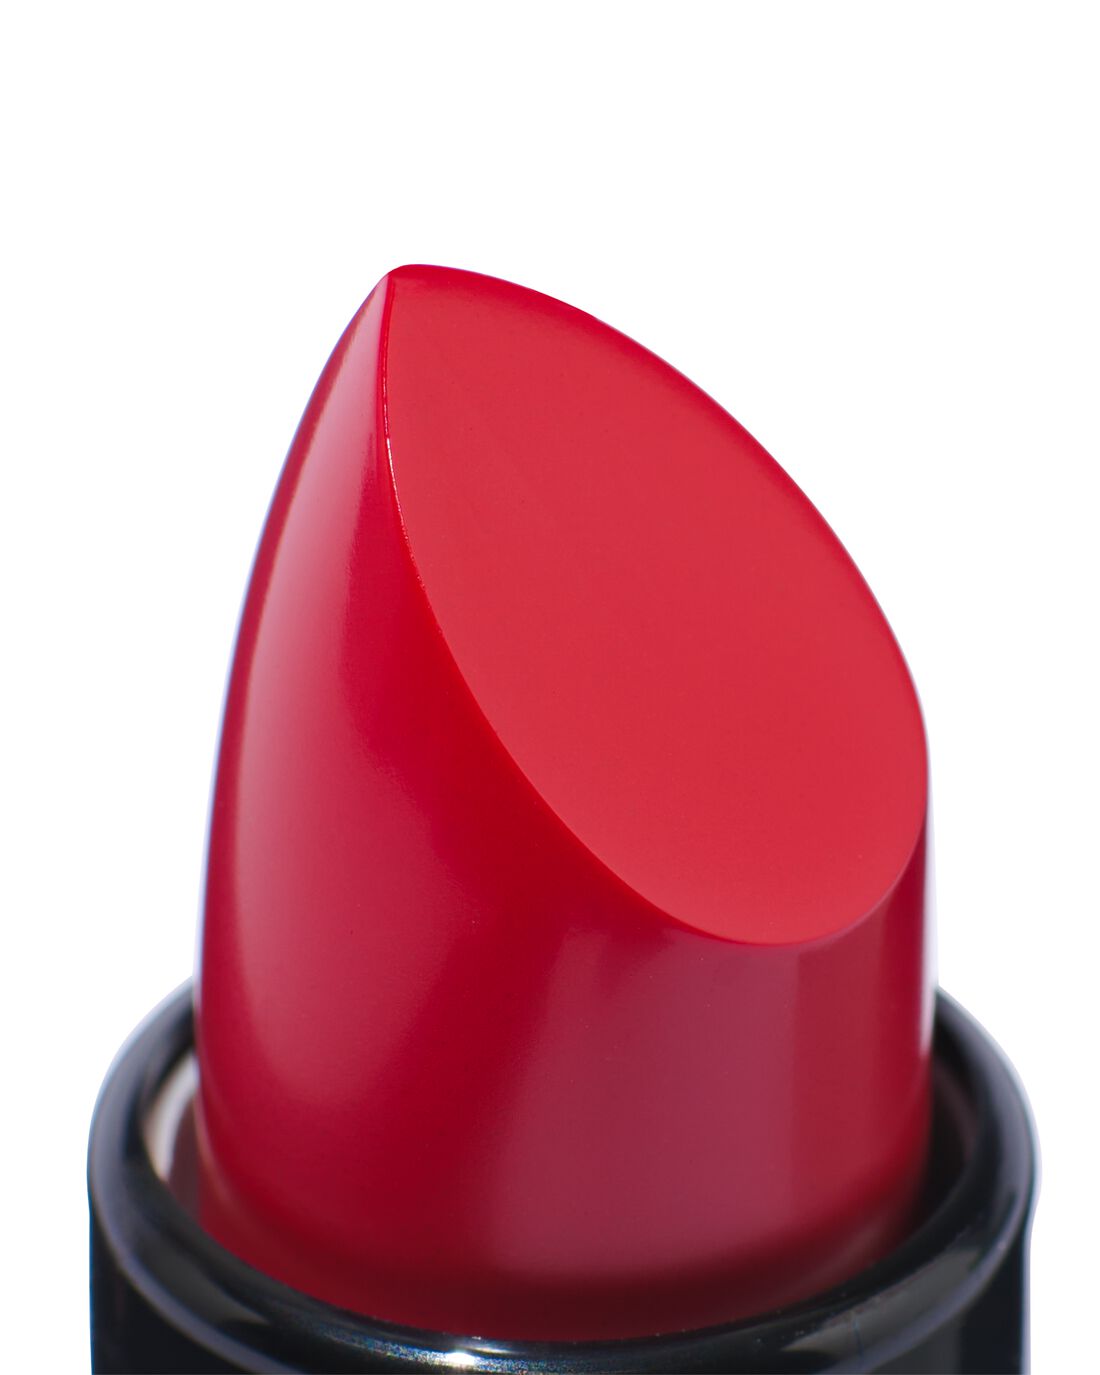 HEMA Lipstick Moisturizing 934 Classic Red (rood)